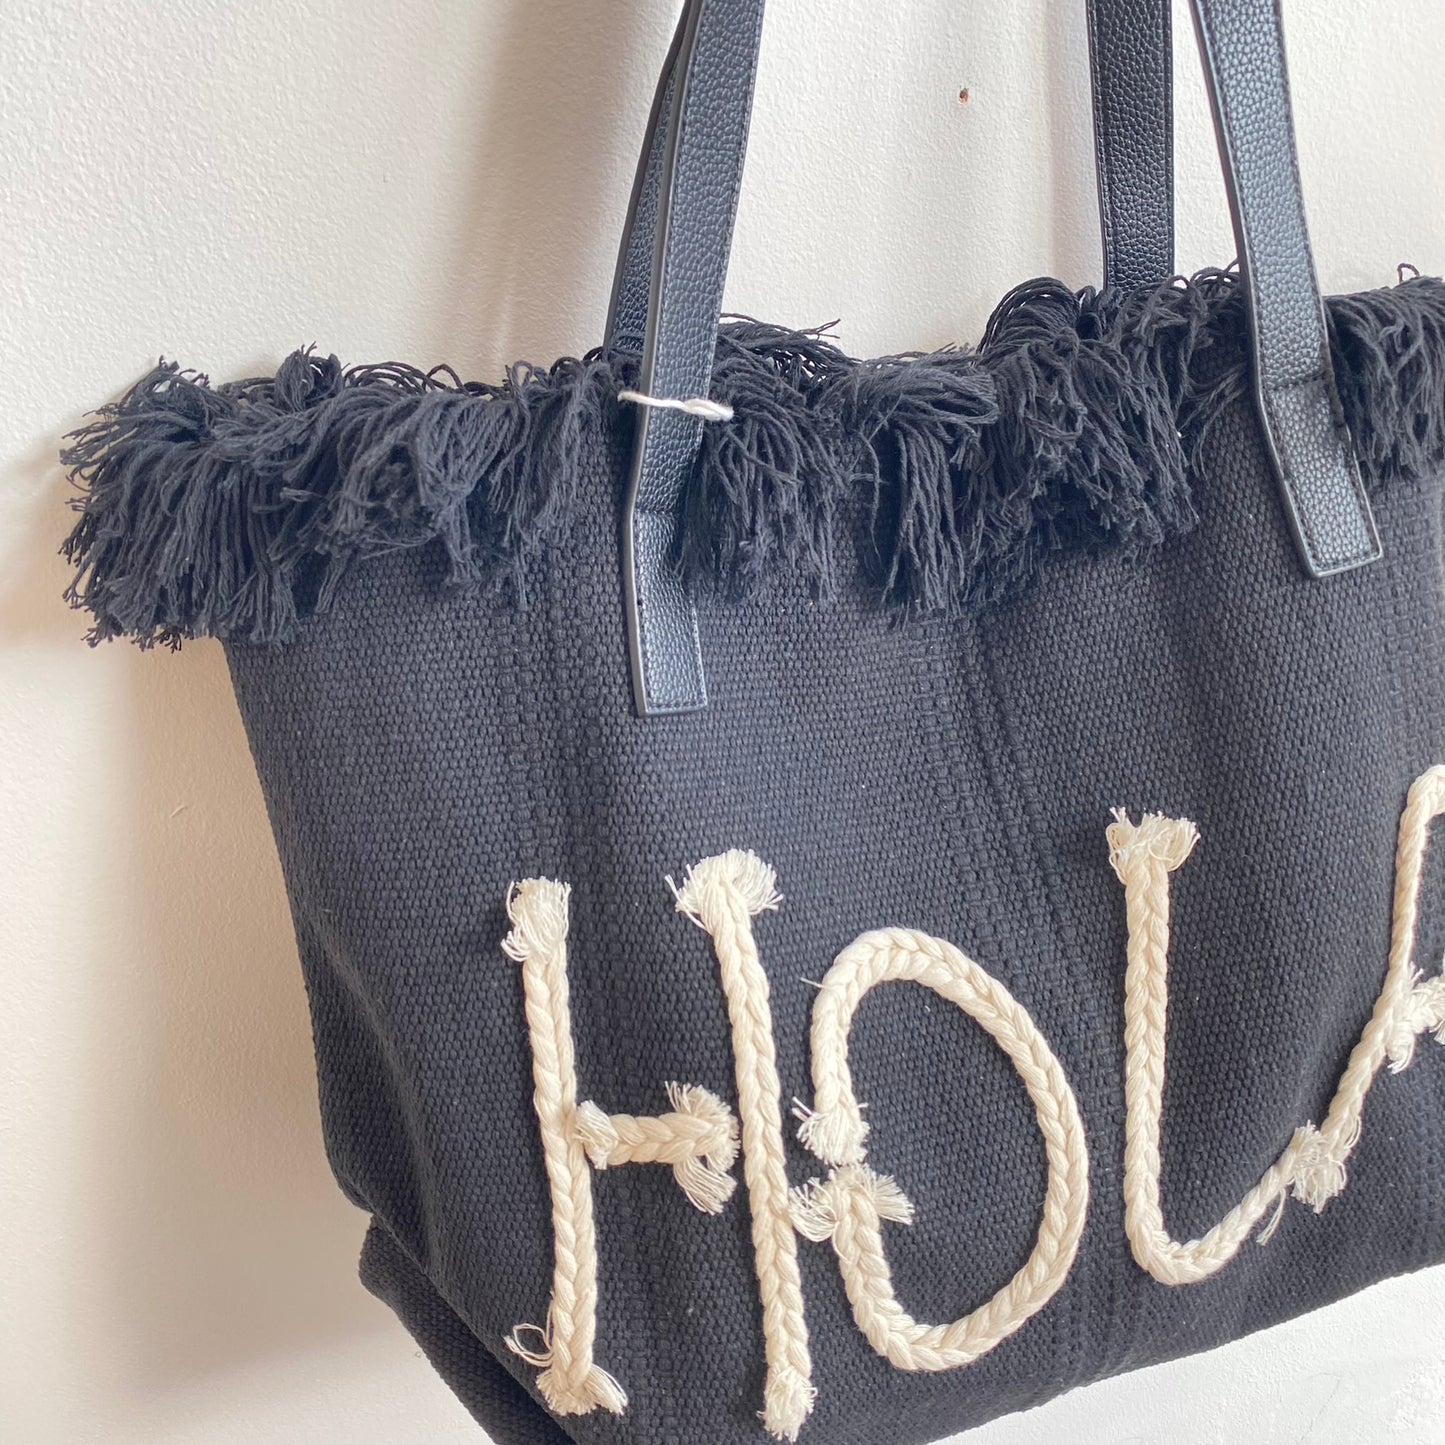 'Hola' bag - black